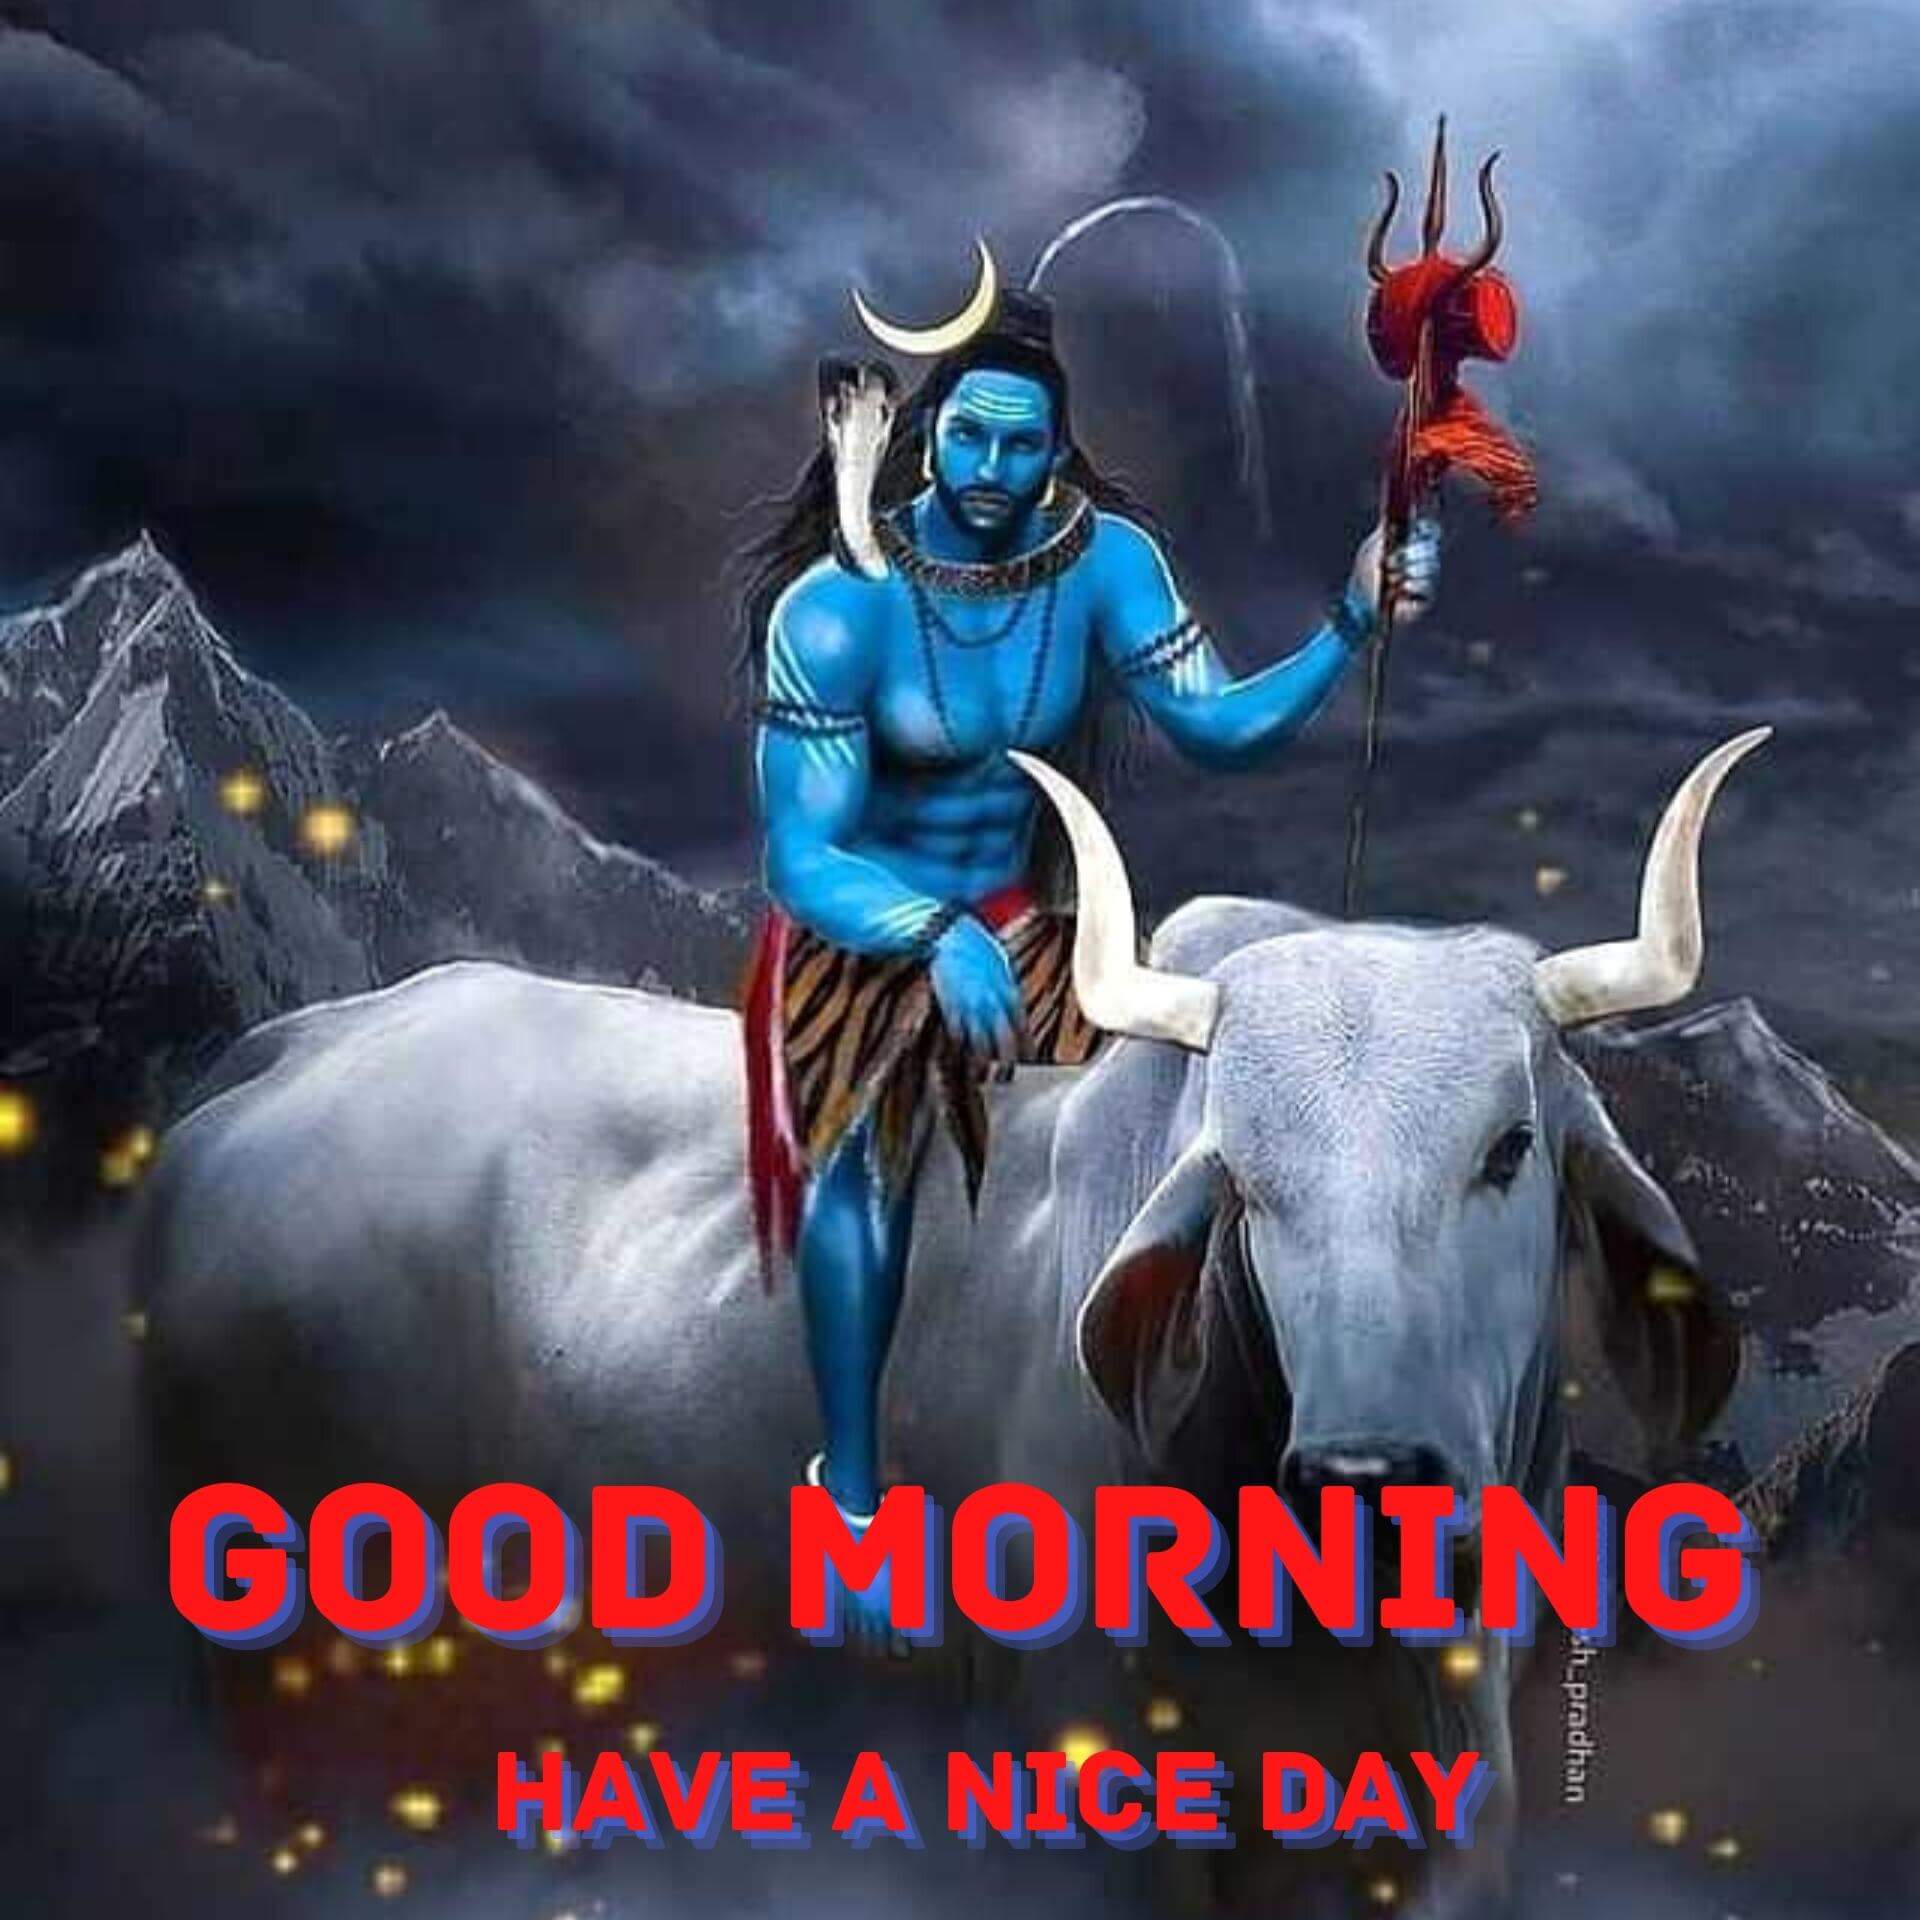 Shiva Good Morning Wallpaper Free Download for Whatsapp Facebook